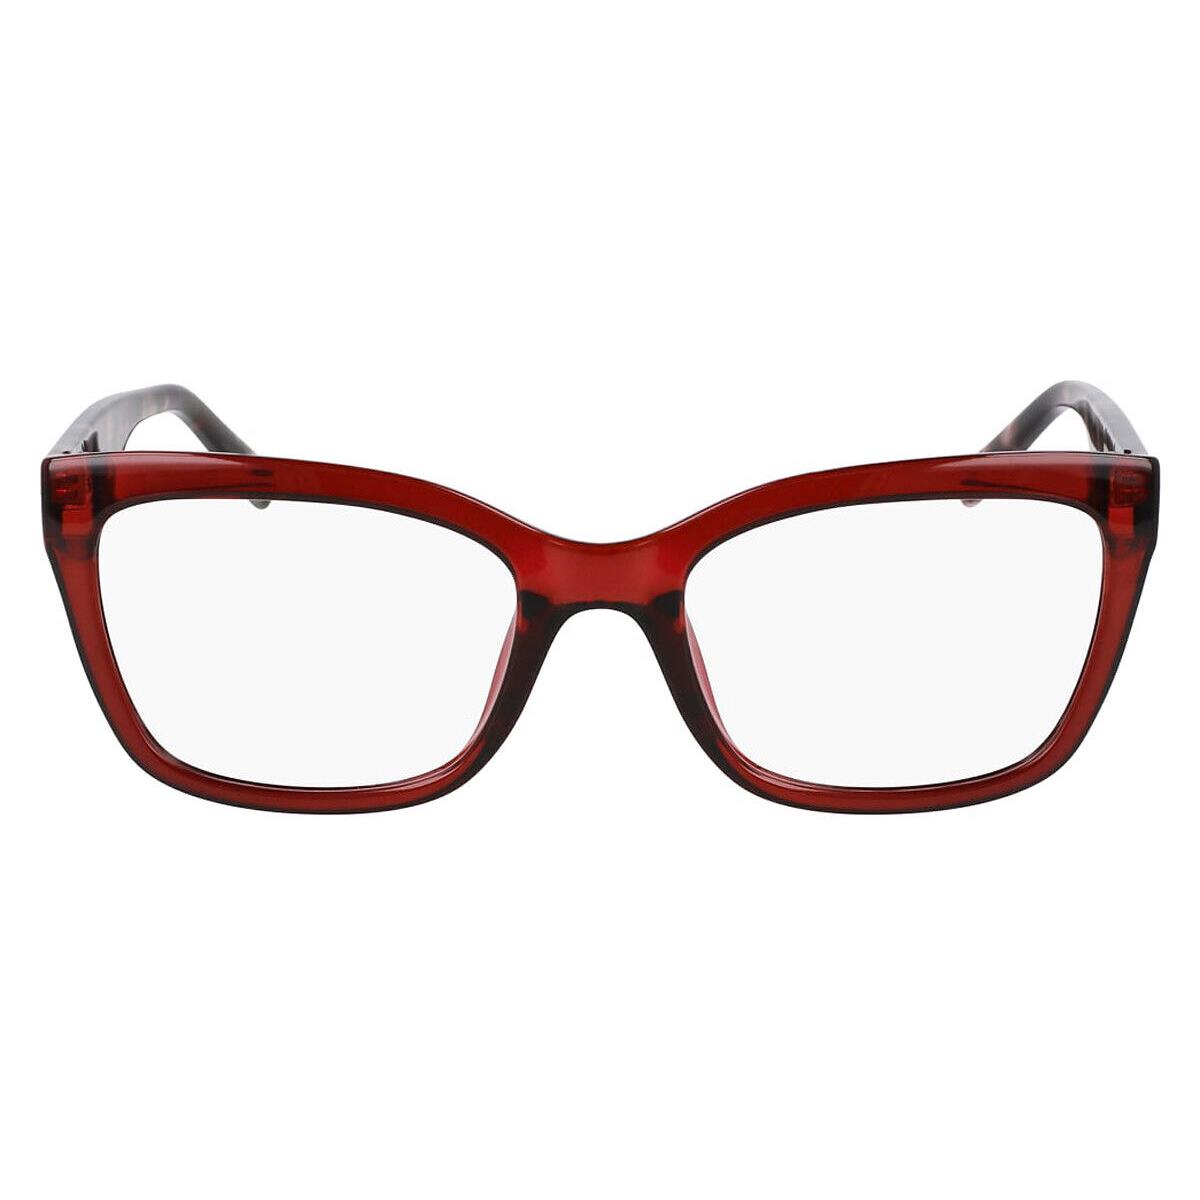 Dkny DK5068 Eyeglasses Women Berry Crystal 52mm